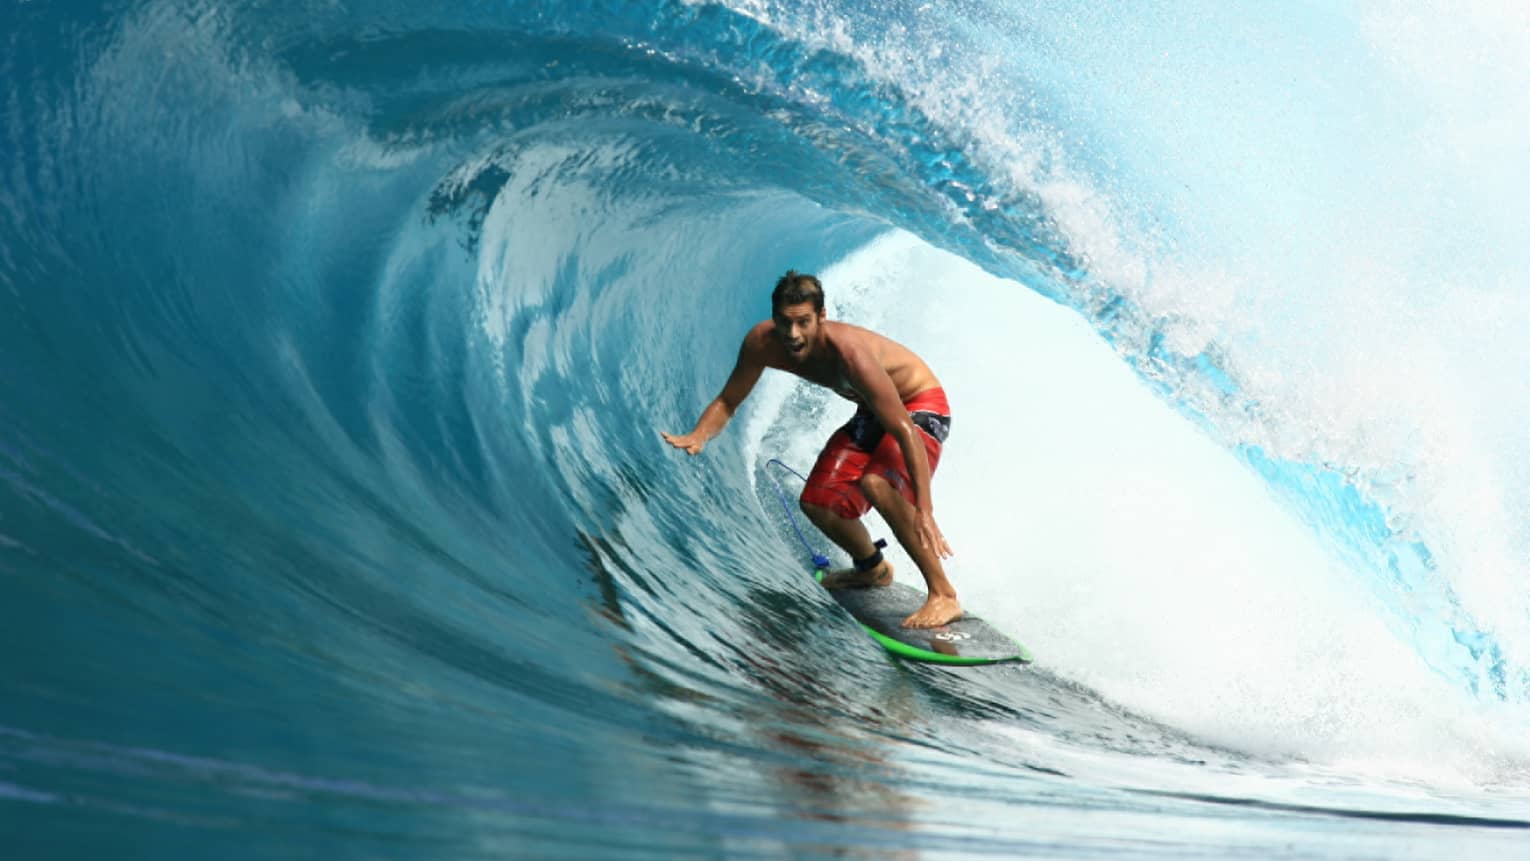 World Champion surfer David Rastovich rides a wave